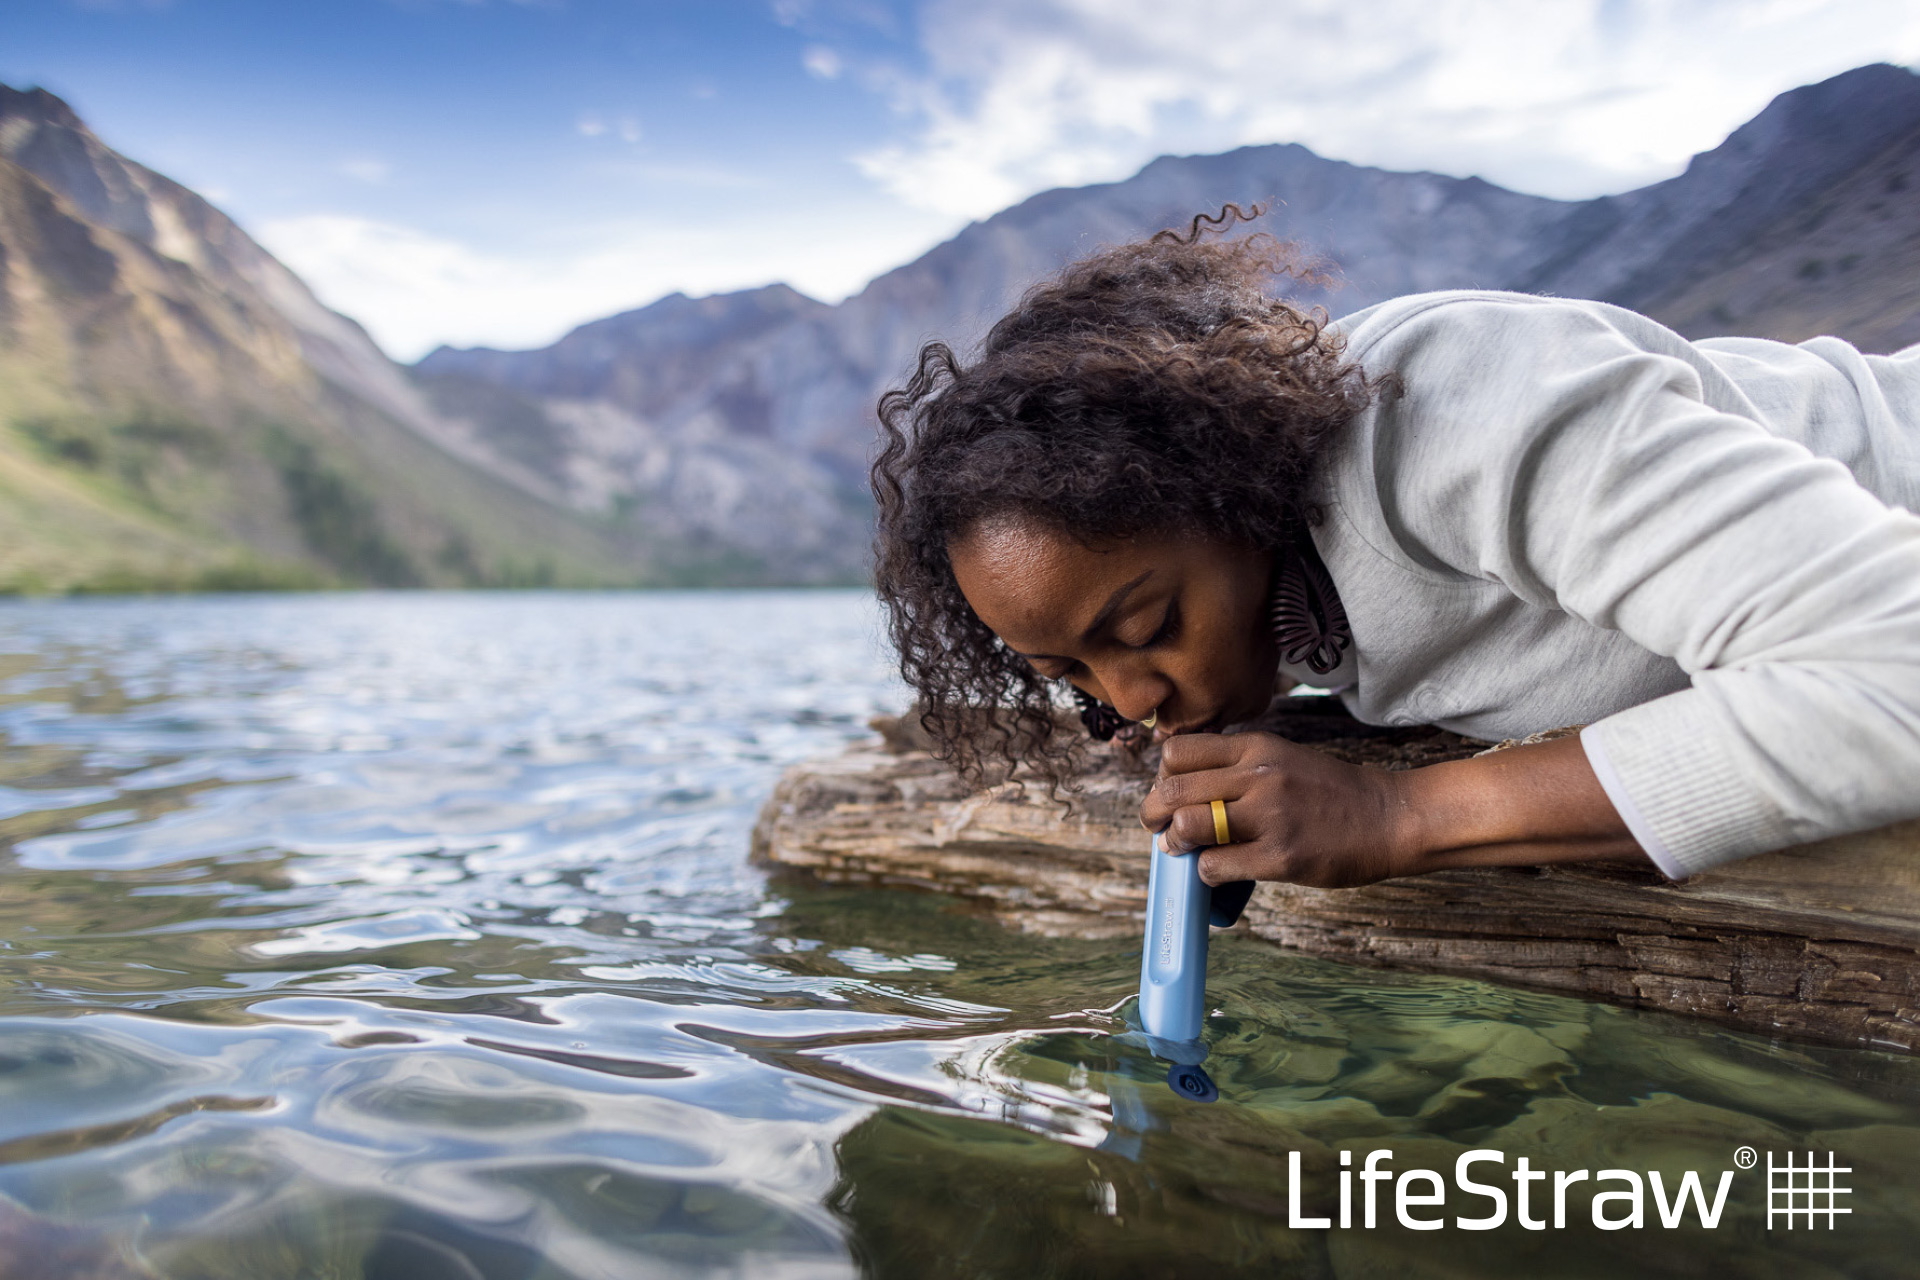 LifeStraw Wasserfilter - Making an Impact